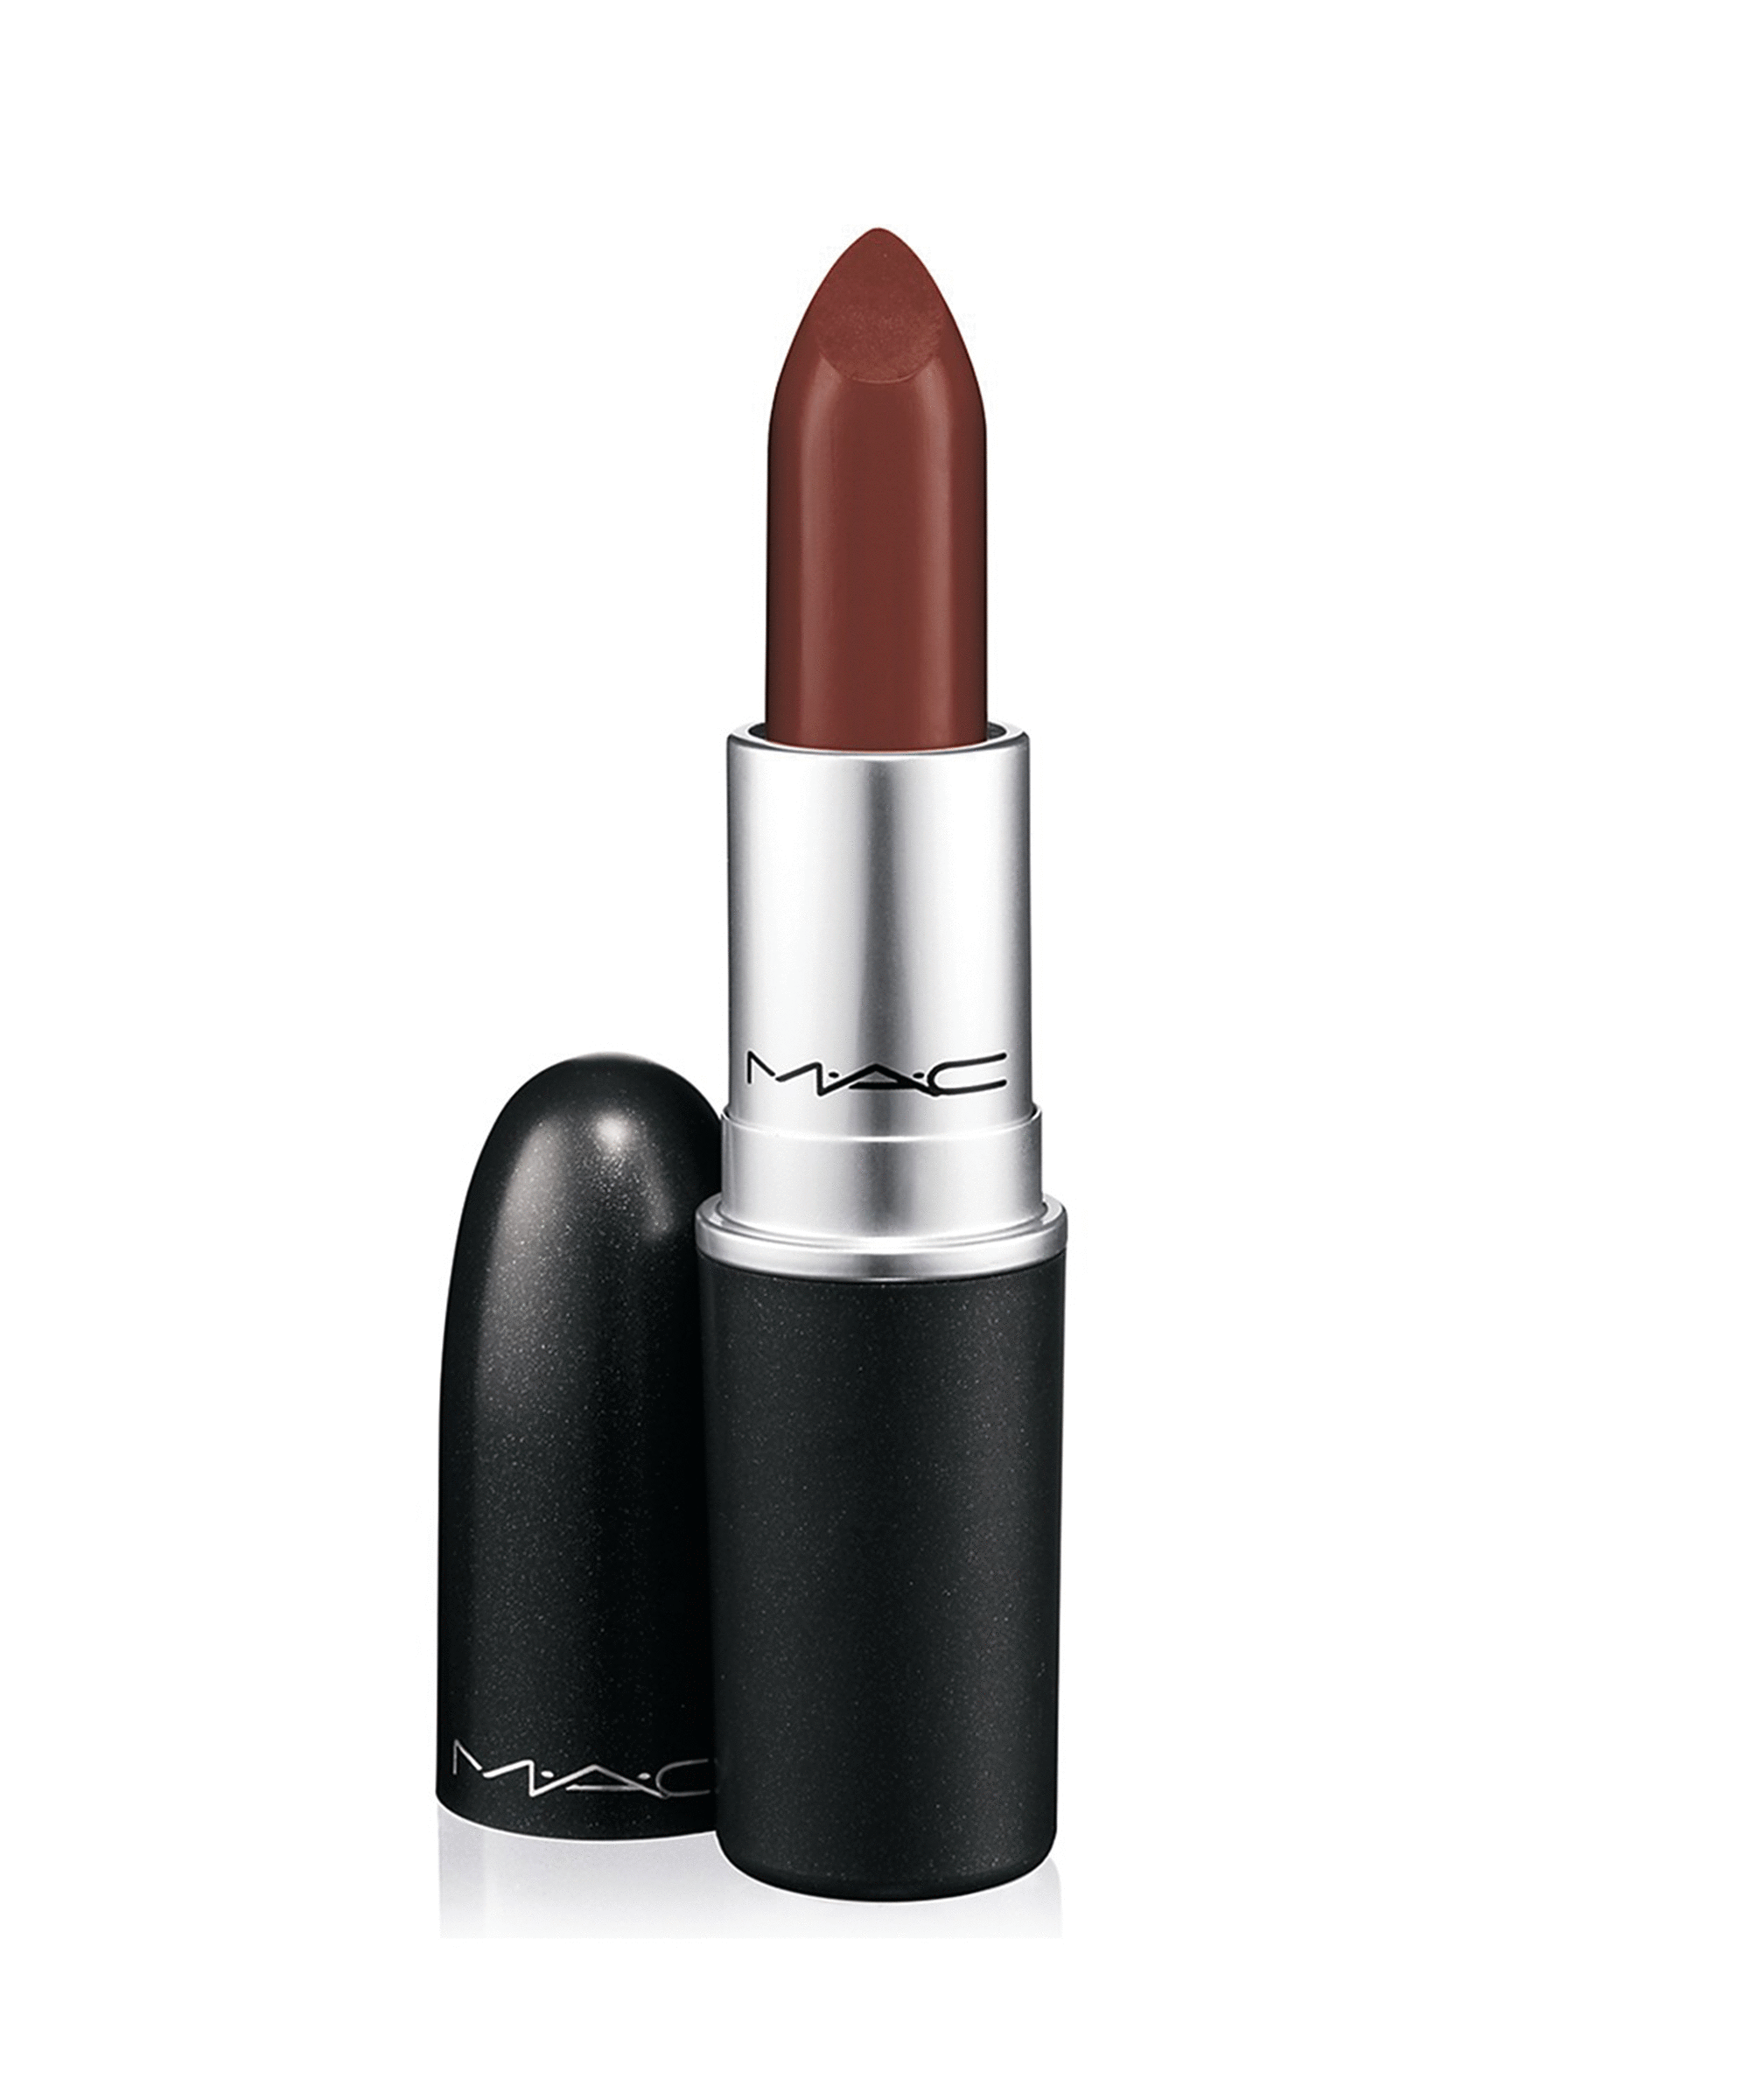 the best nude lipsticks for dark skin tones